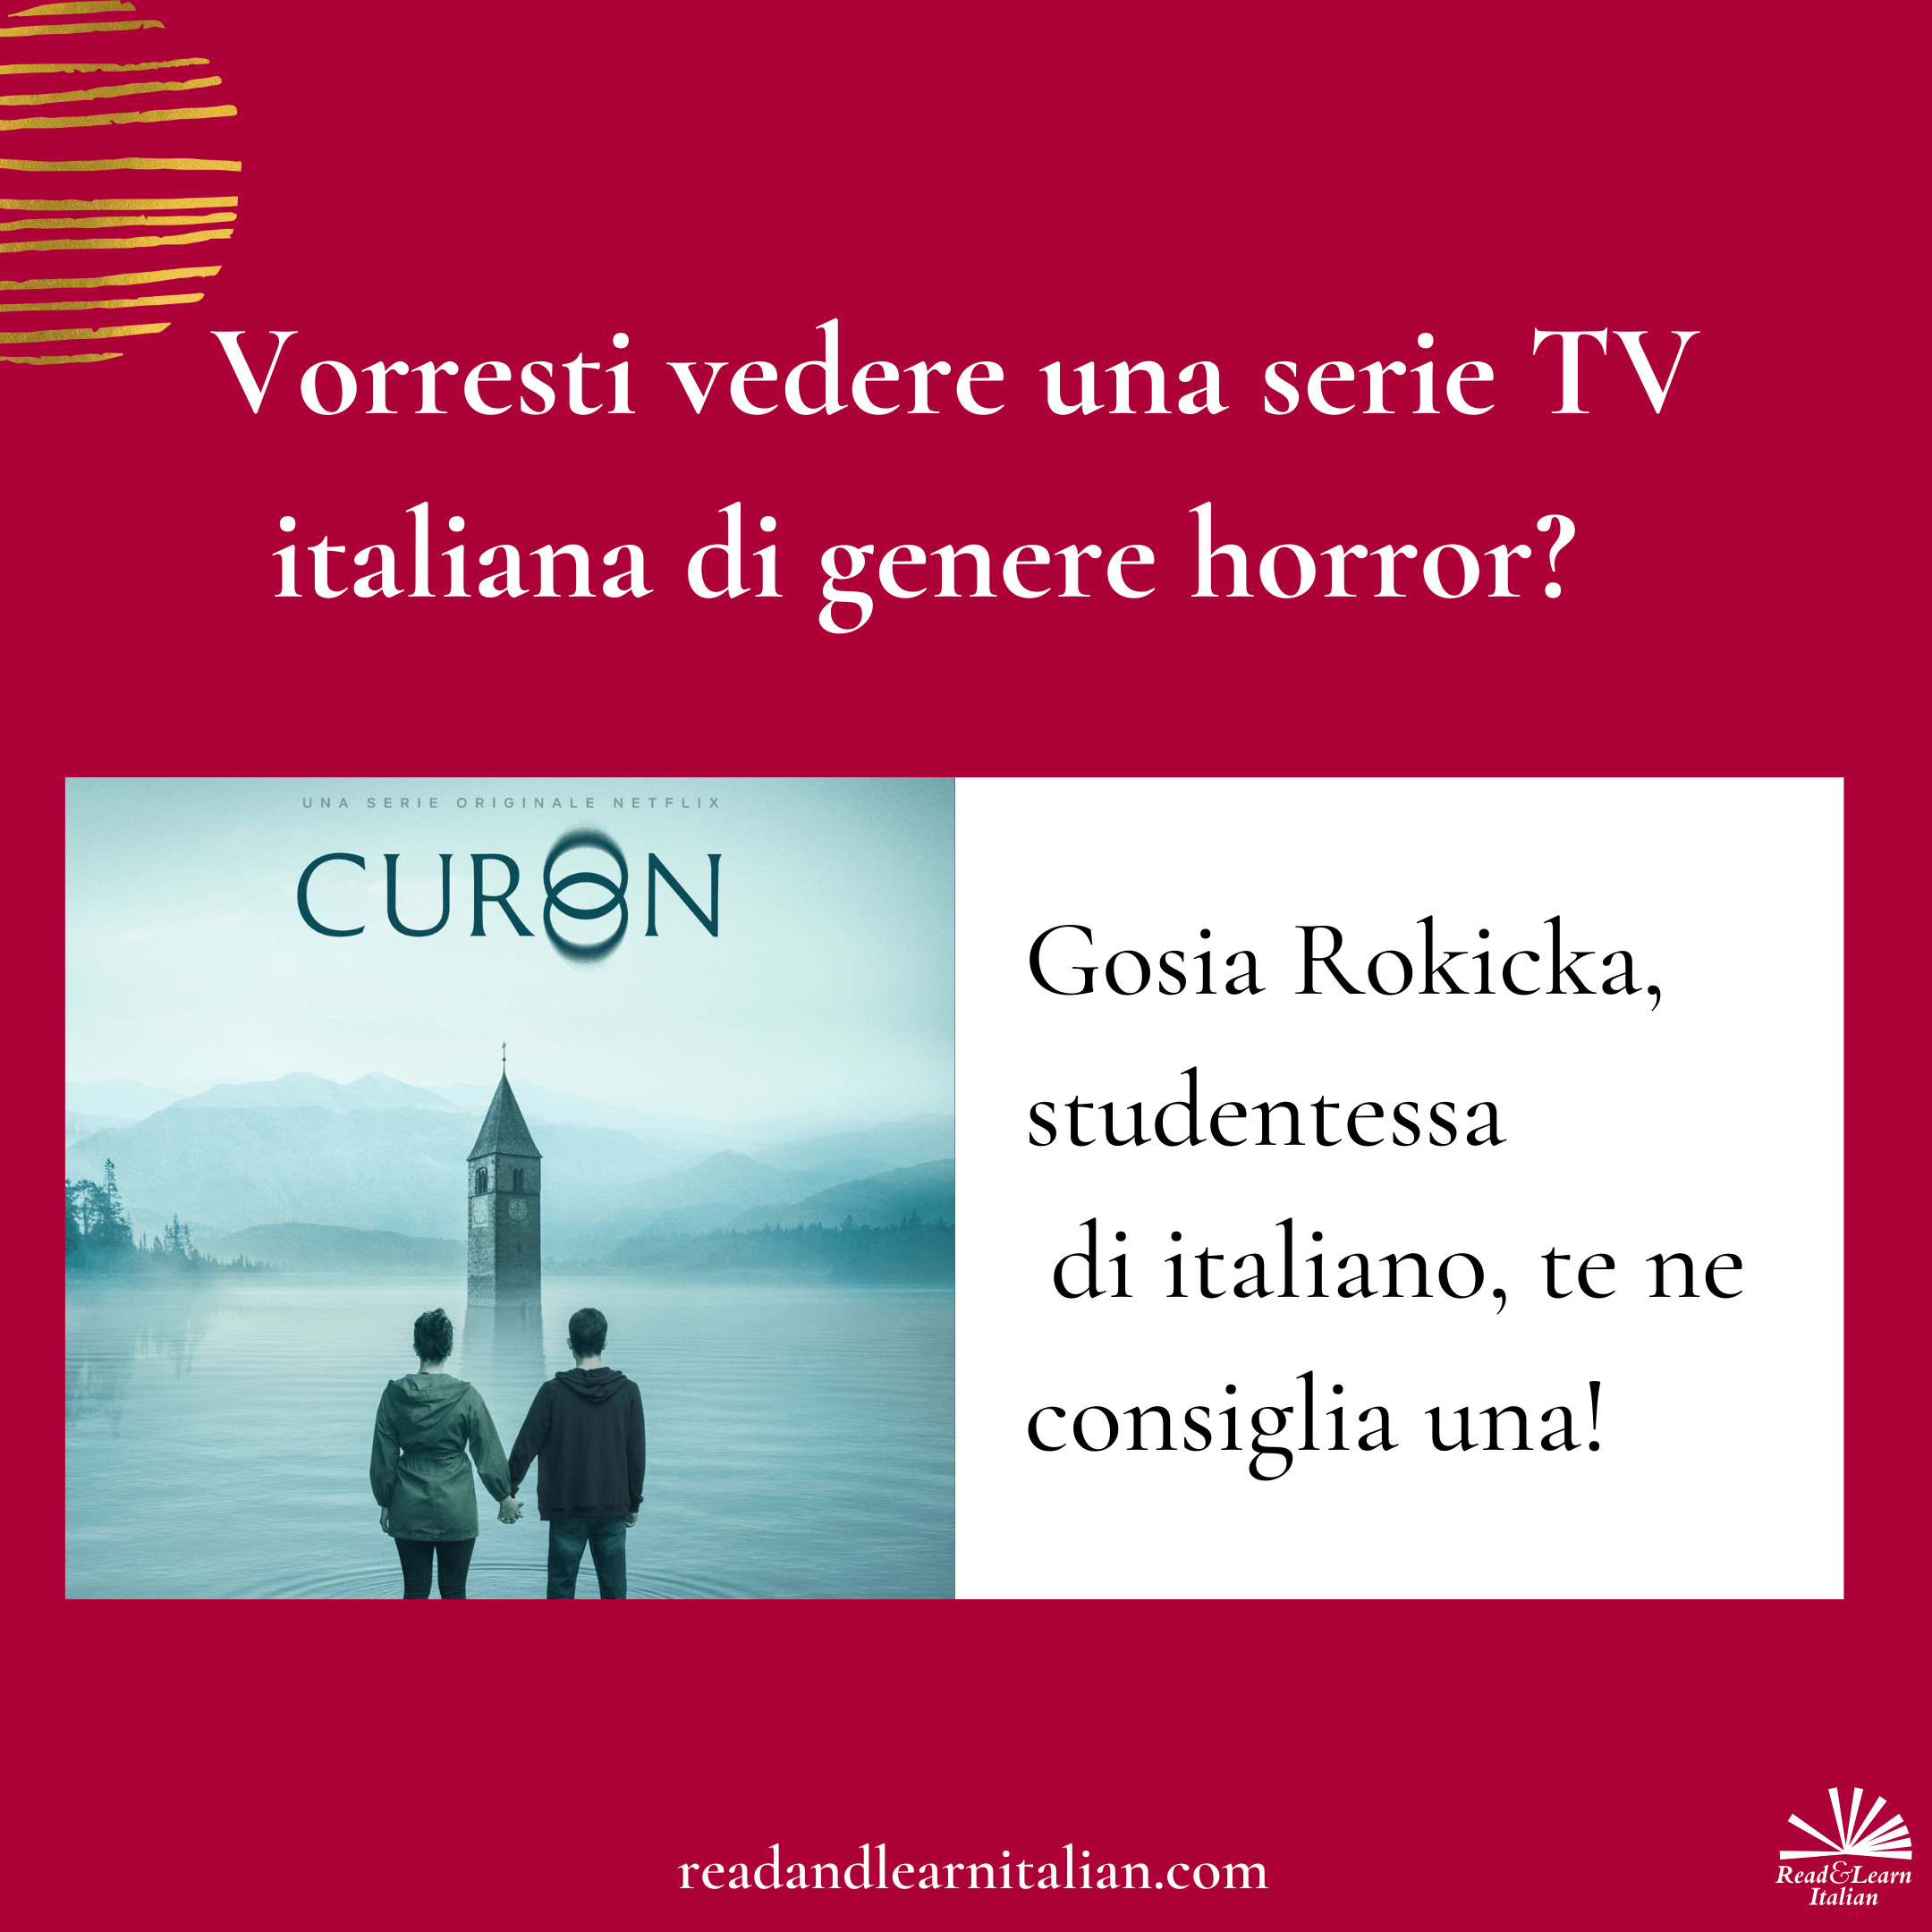 Recensione di Curon, serie TV horror